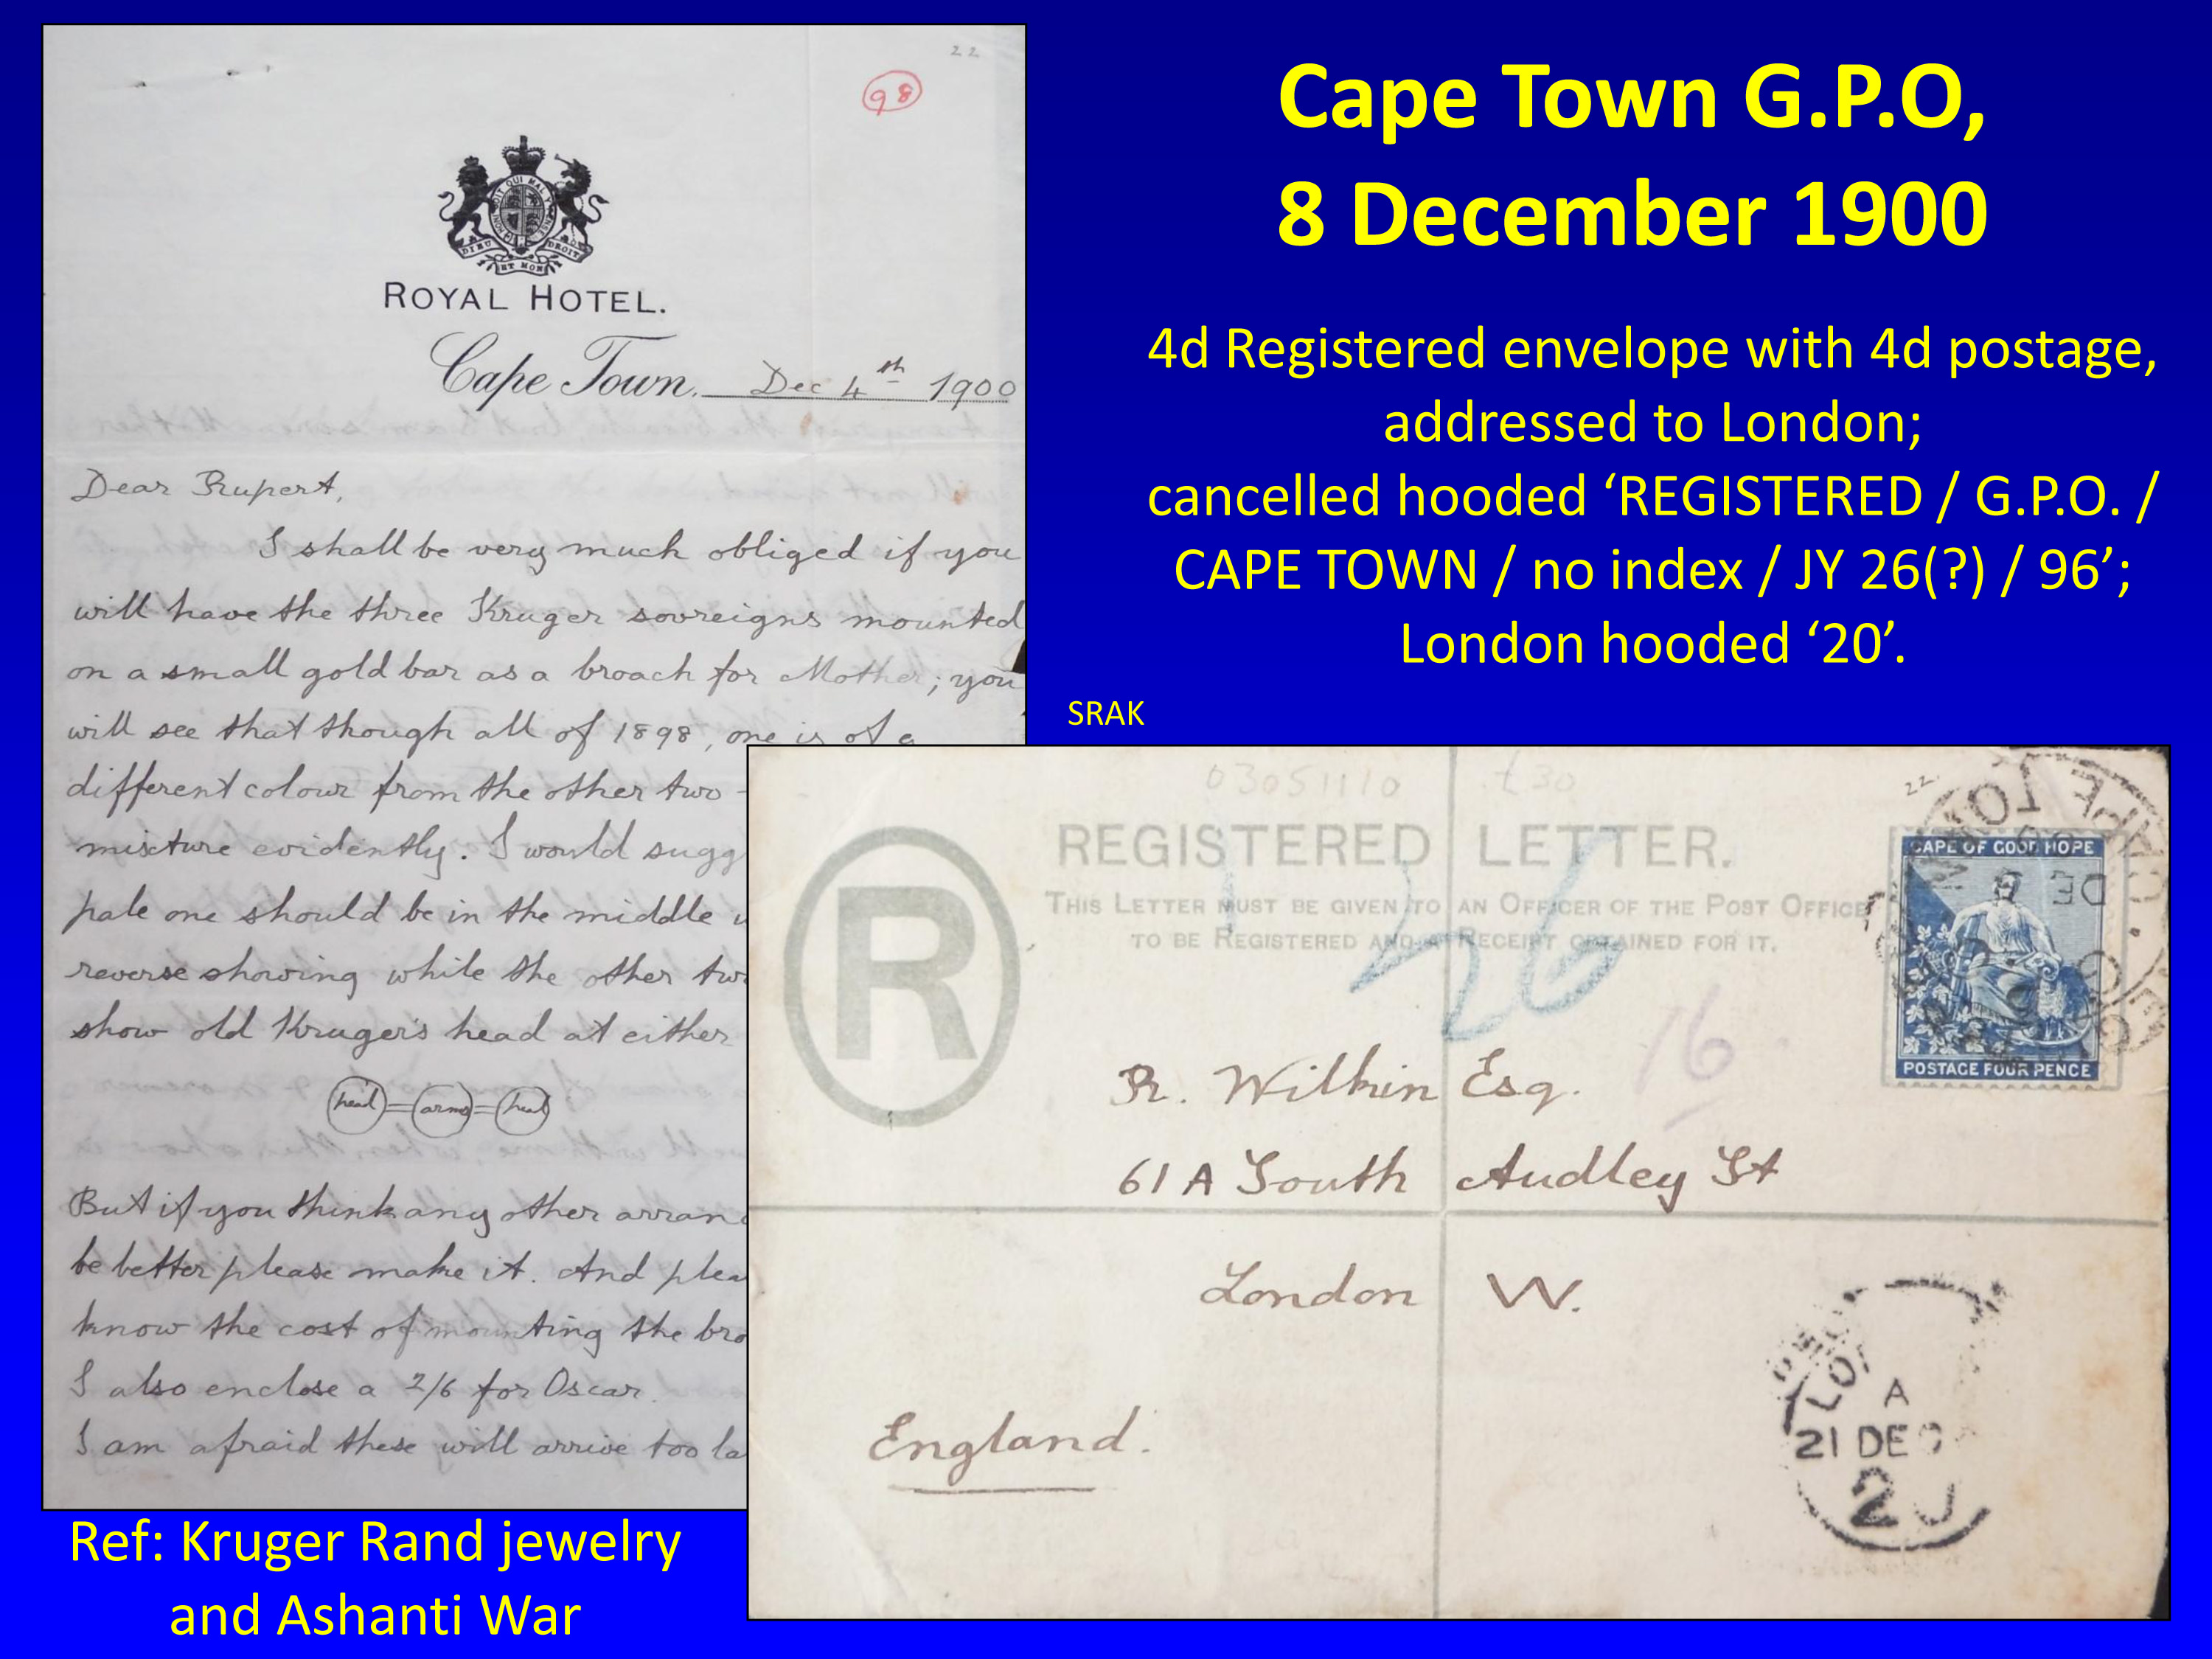 Hooded-Postmarks-of-southern-Africa-13.jpg